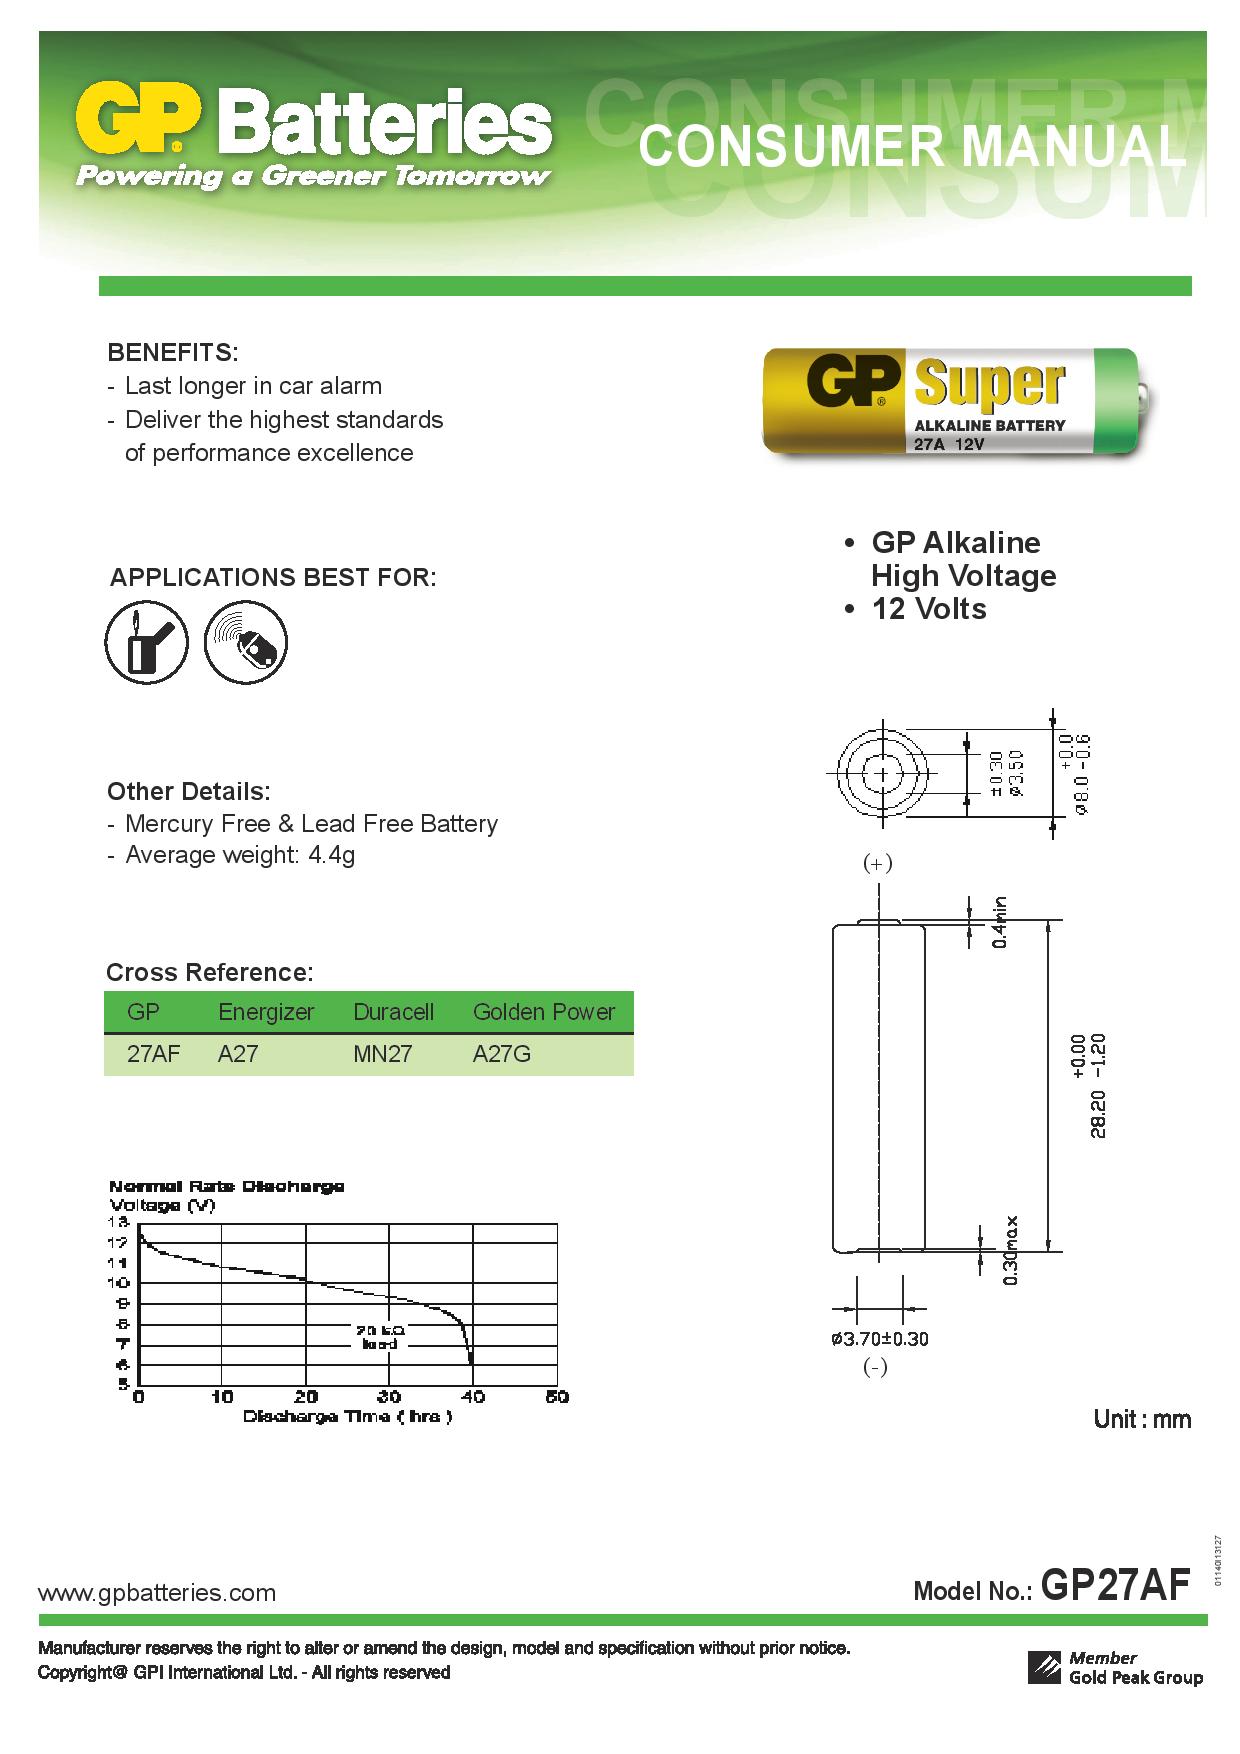 Pilas alcalina 1 x 27A / MN27 - 12V - GP Battery